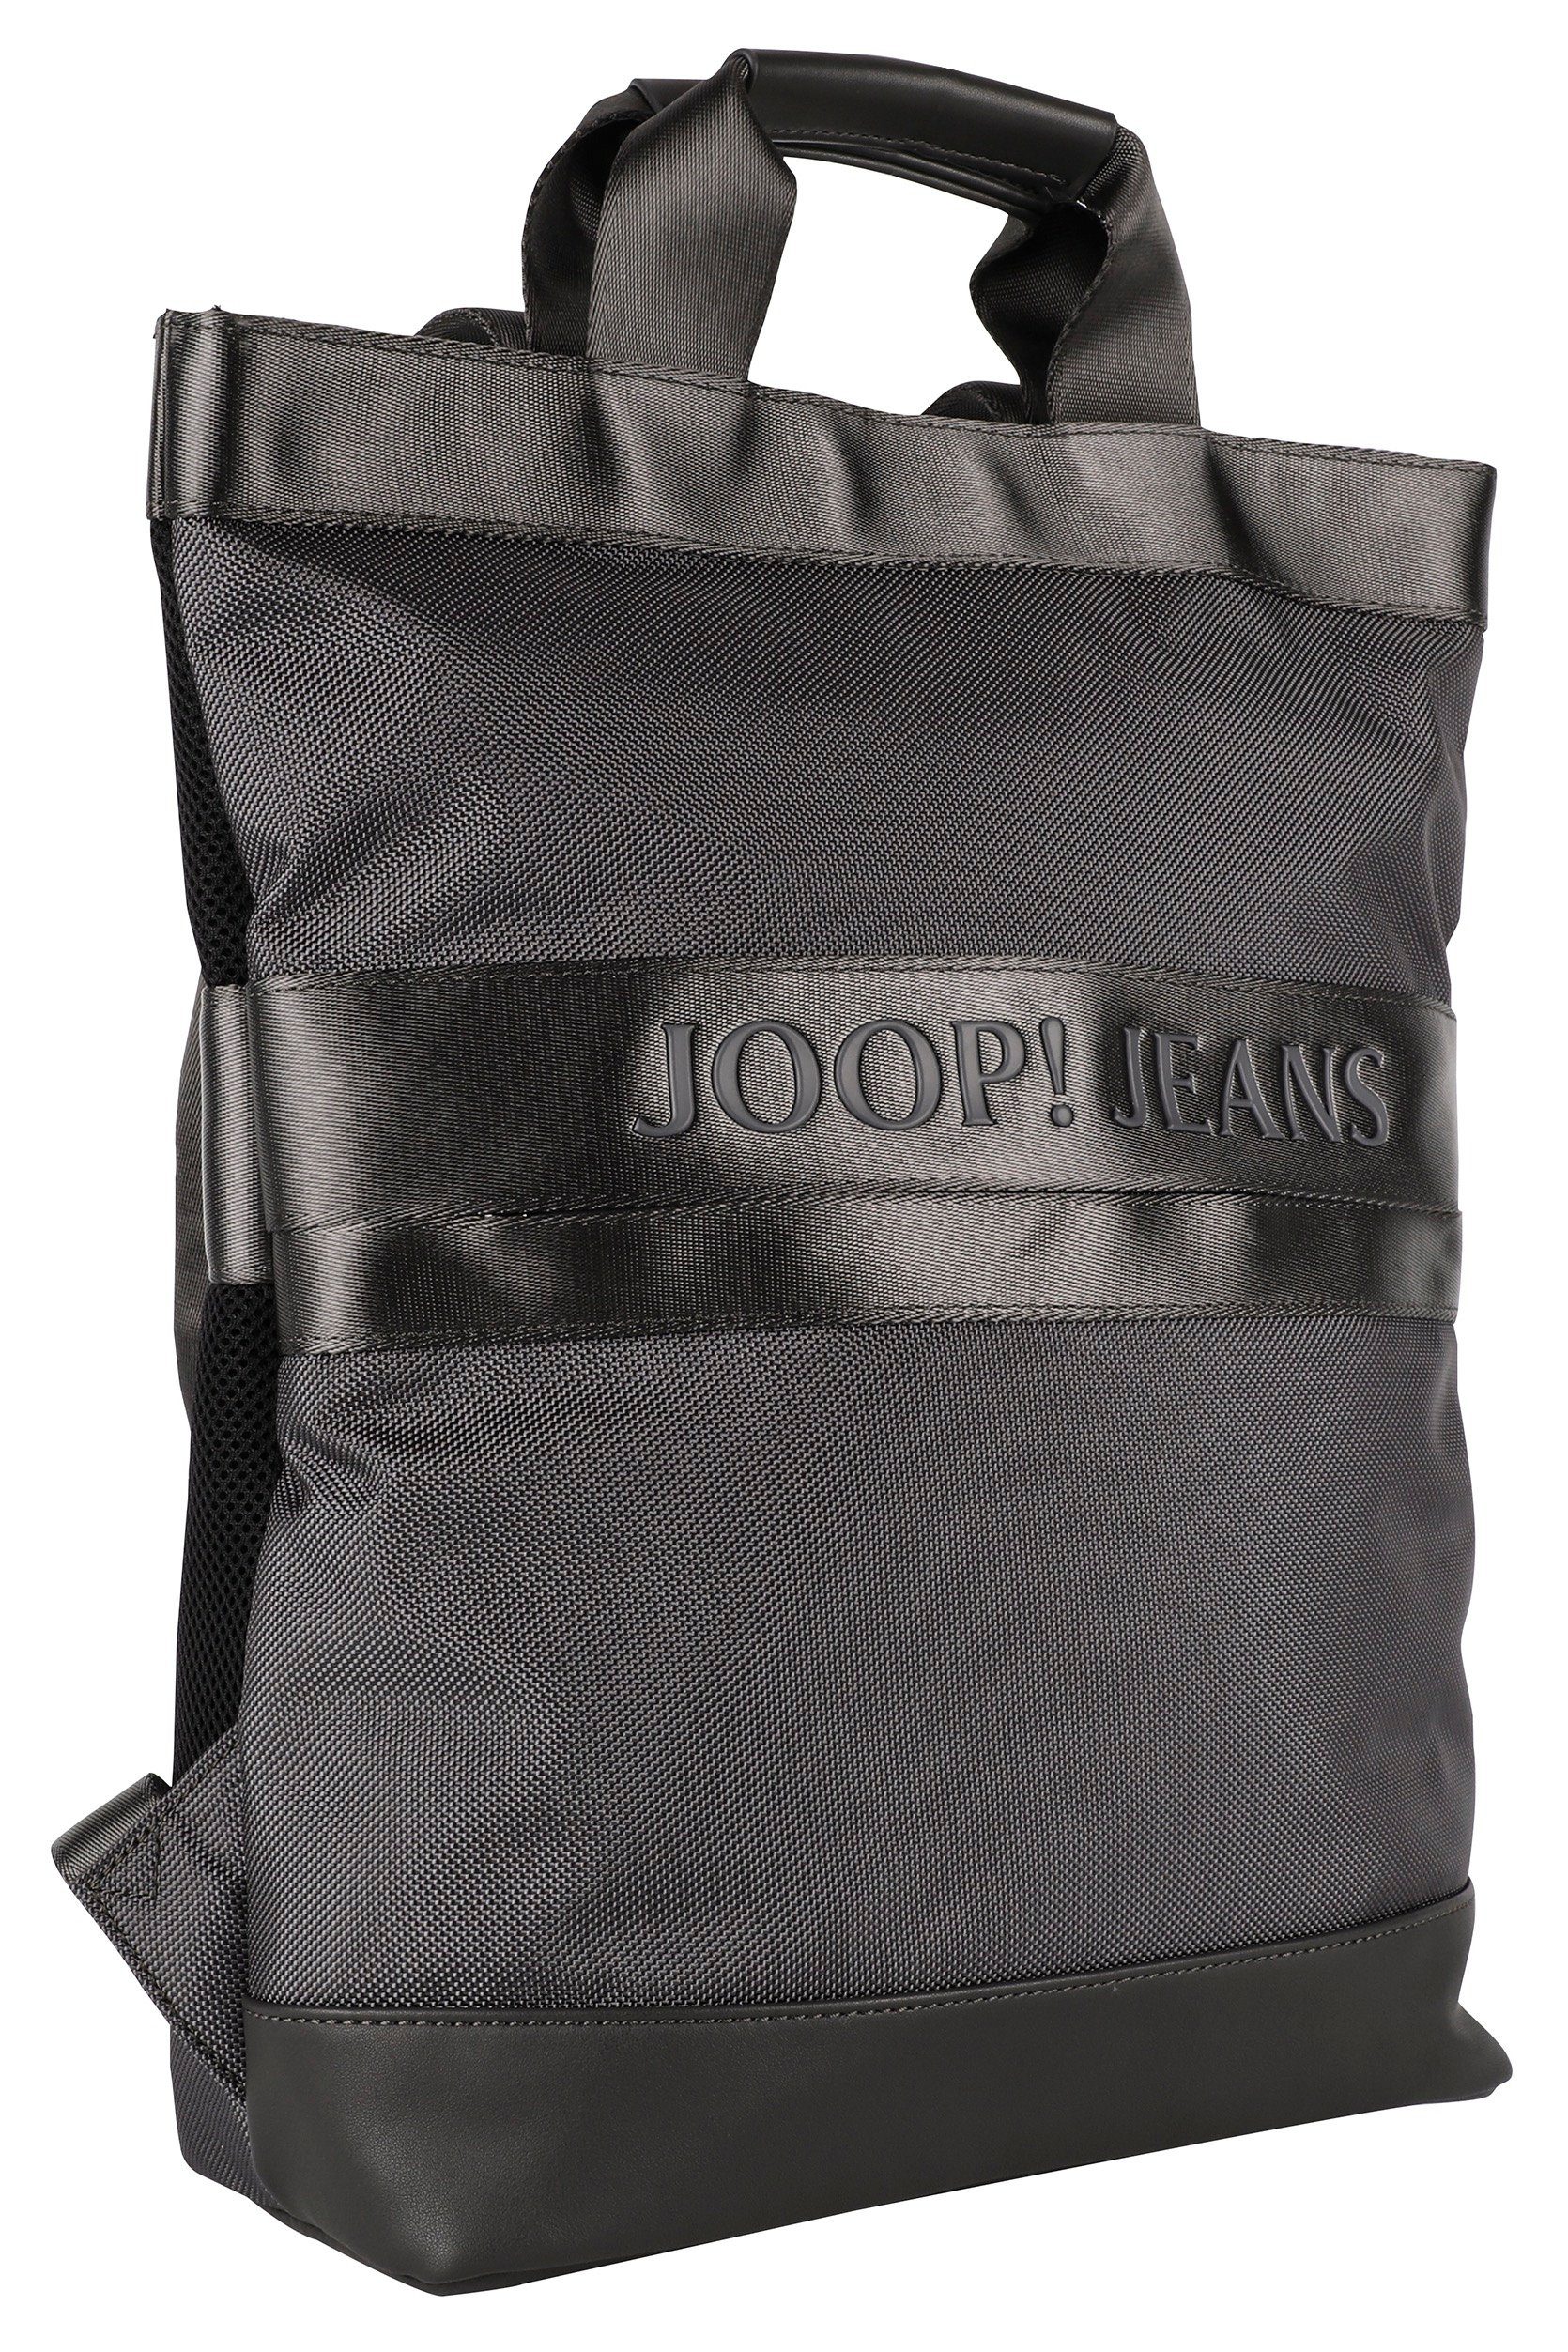 dunkelgrau Joop backpack mit Jeans modica Cityrucksack svz, falk Reißverschluss-Vortasche